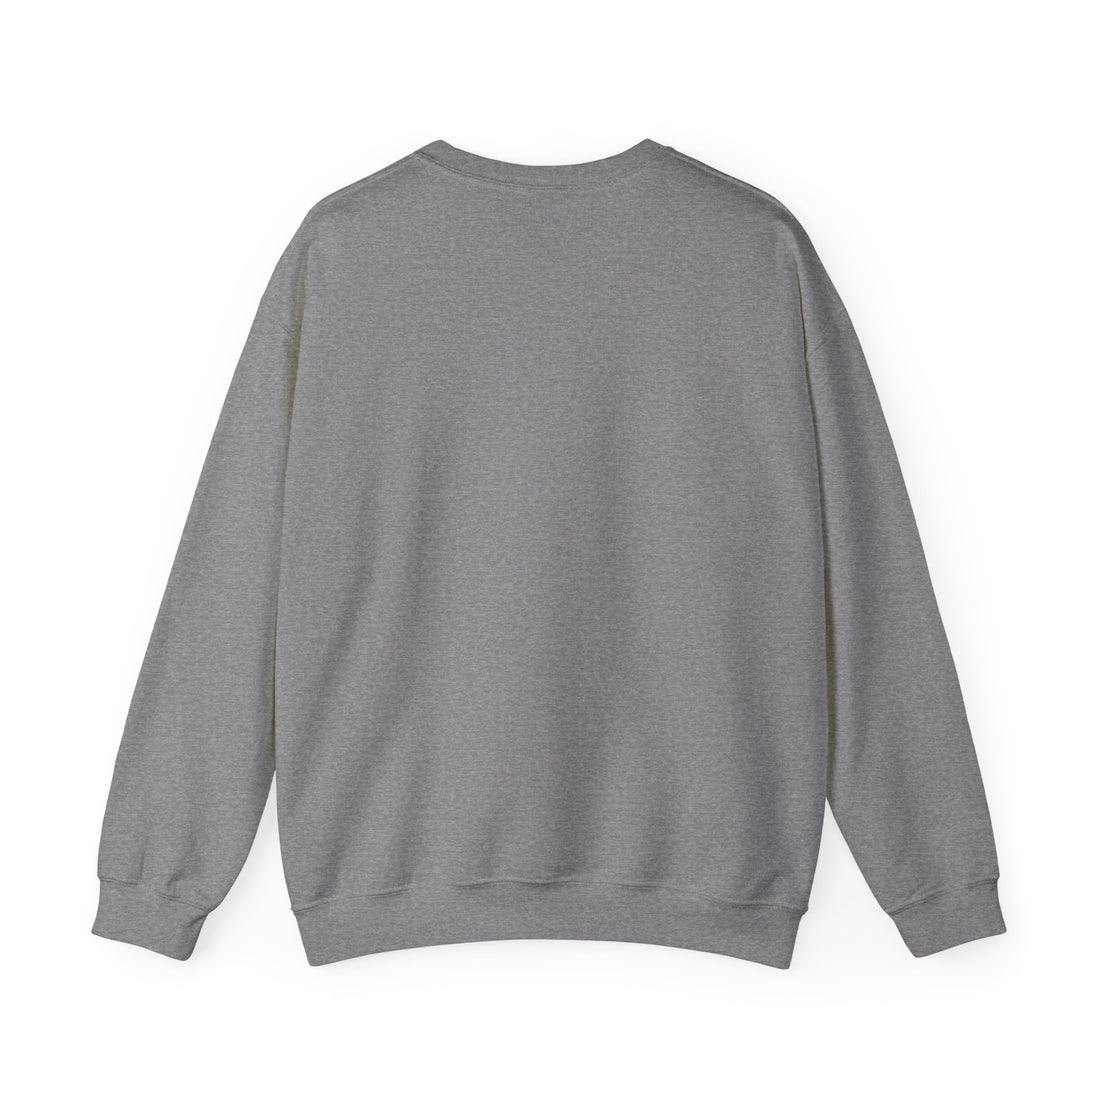 Senegal x Streetwear Series - Crewneck Sweatshirt